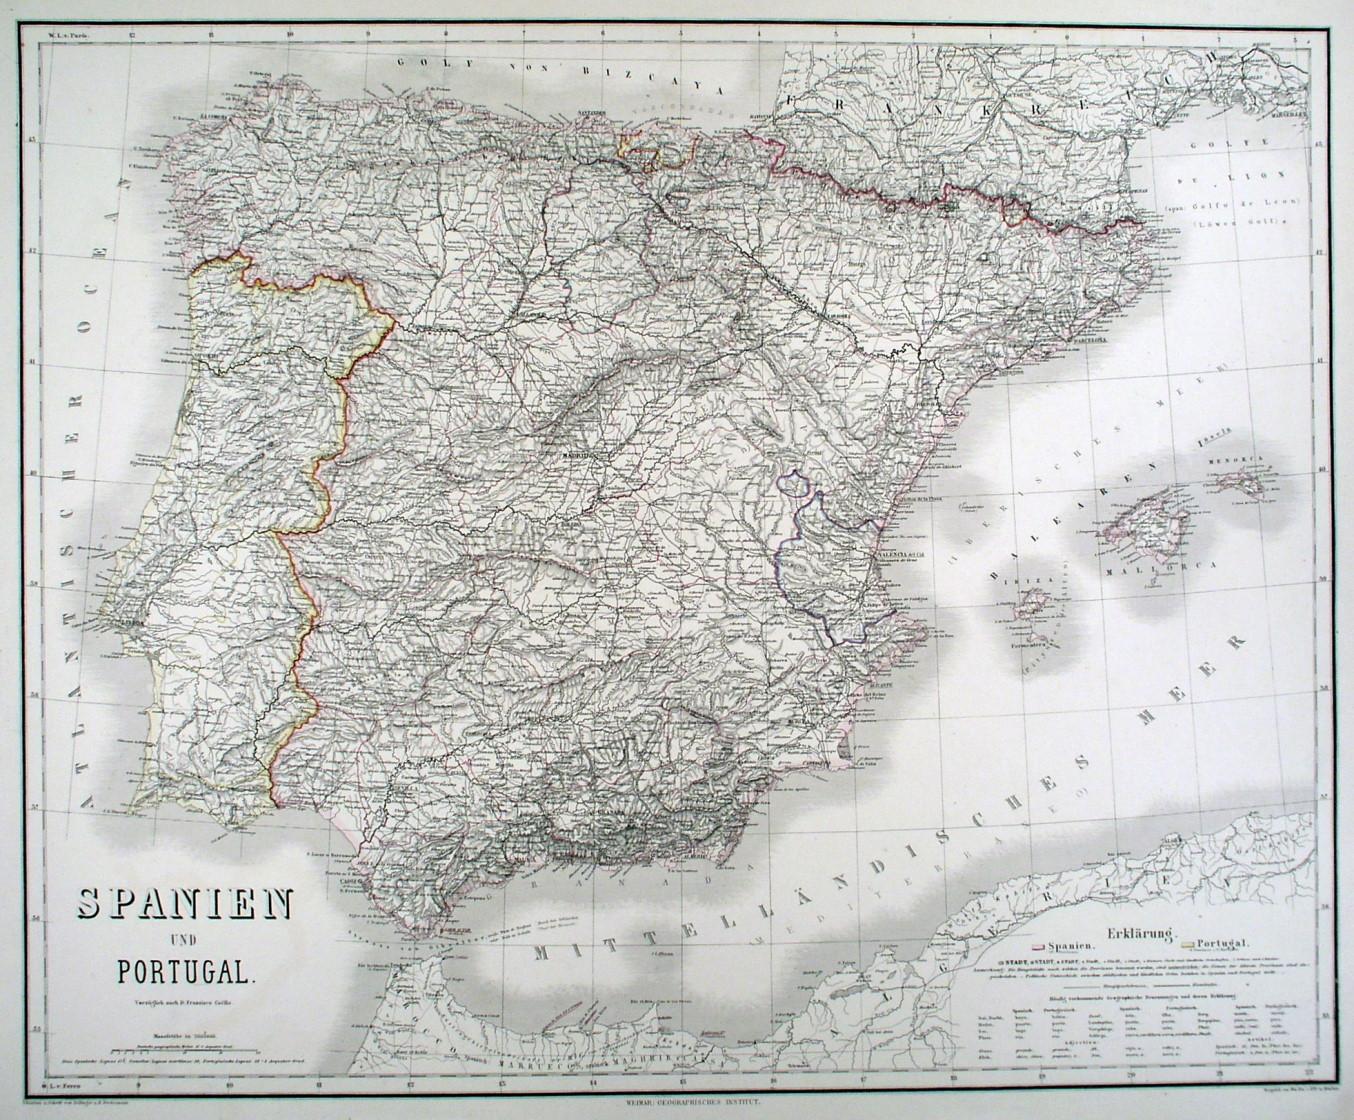 Spanien Karte Spanien Und Portugal Art Nbsp Nbsp Print Nbsp Nbsp Poster Peter Bierl Buch Kunstantiquariat